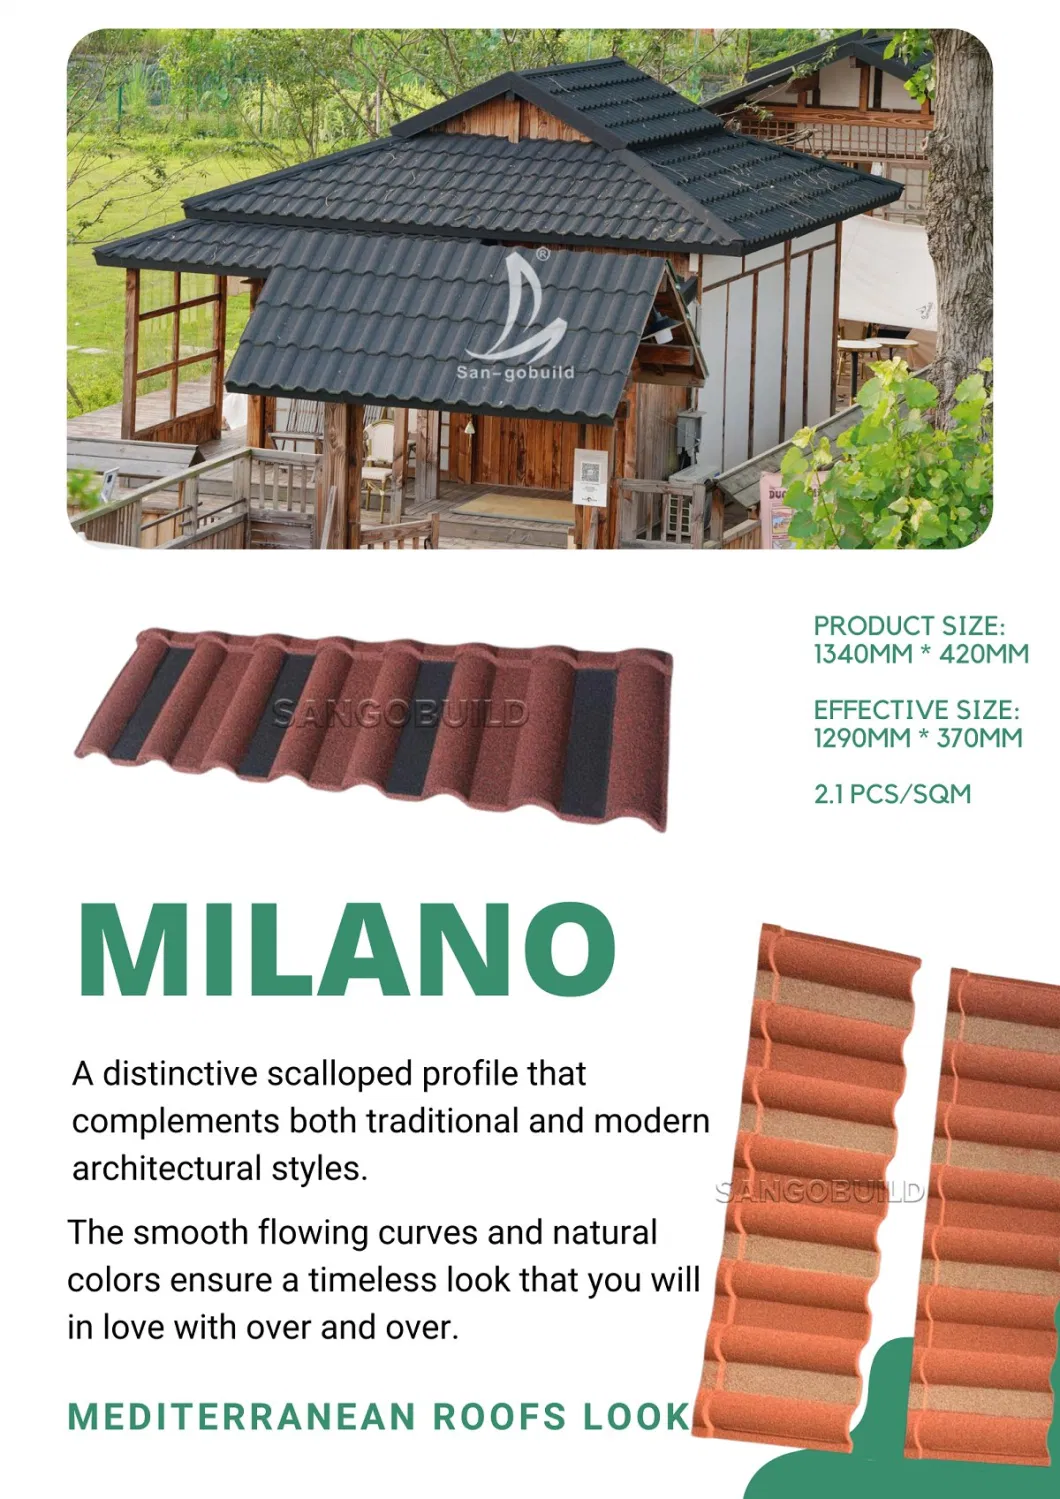 0.5mm High New Zealand Standard Roof Tiles Concrete Roof Tiles